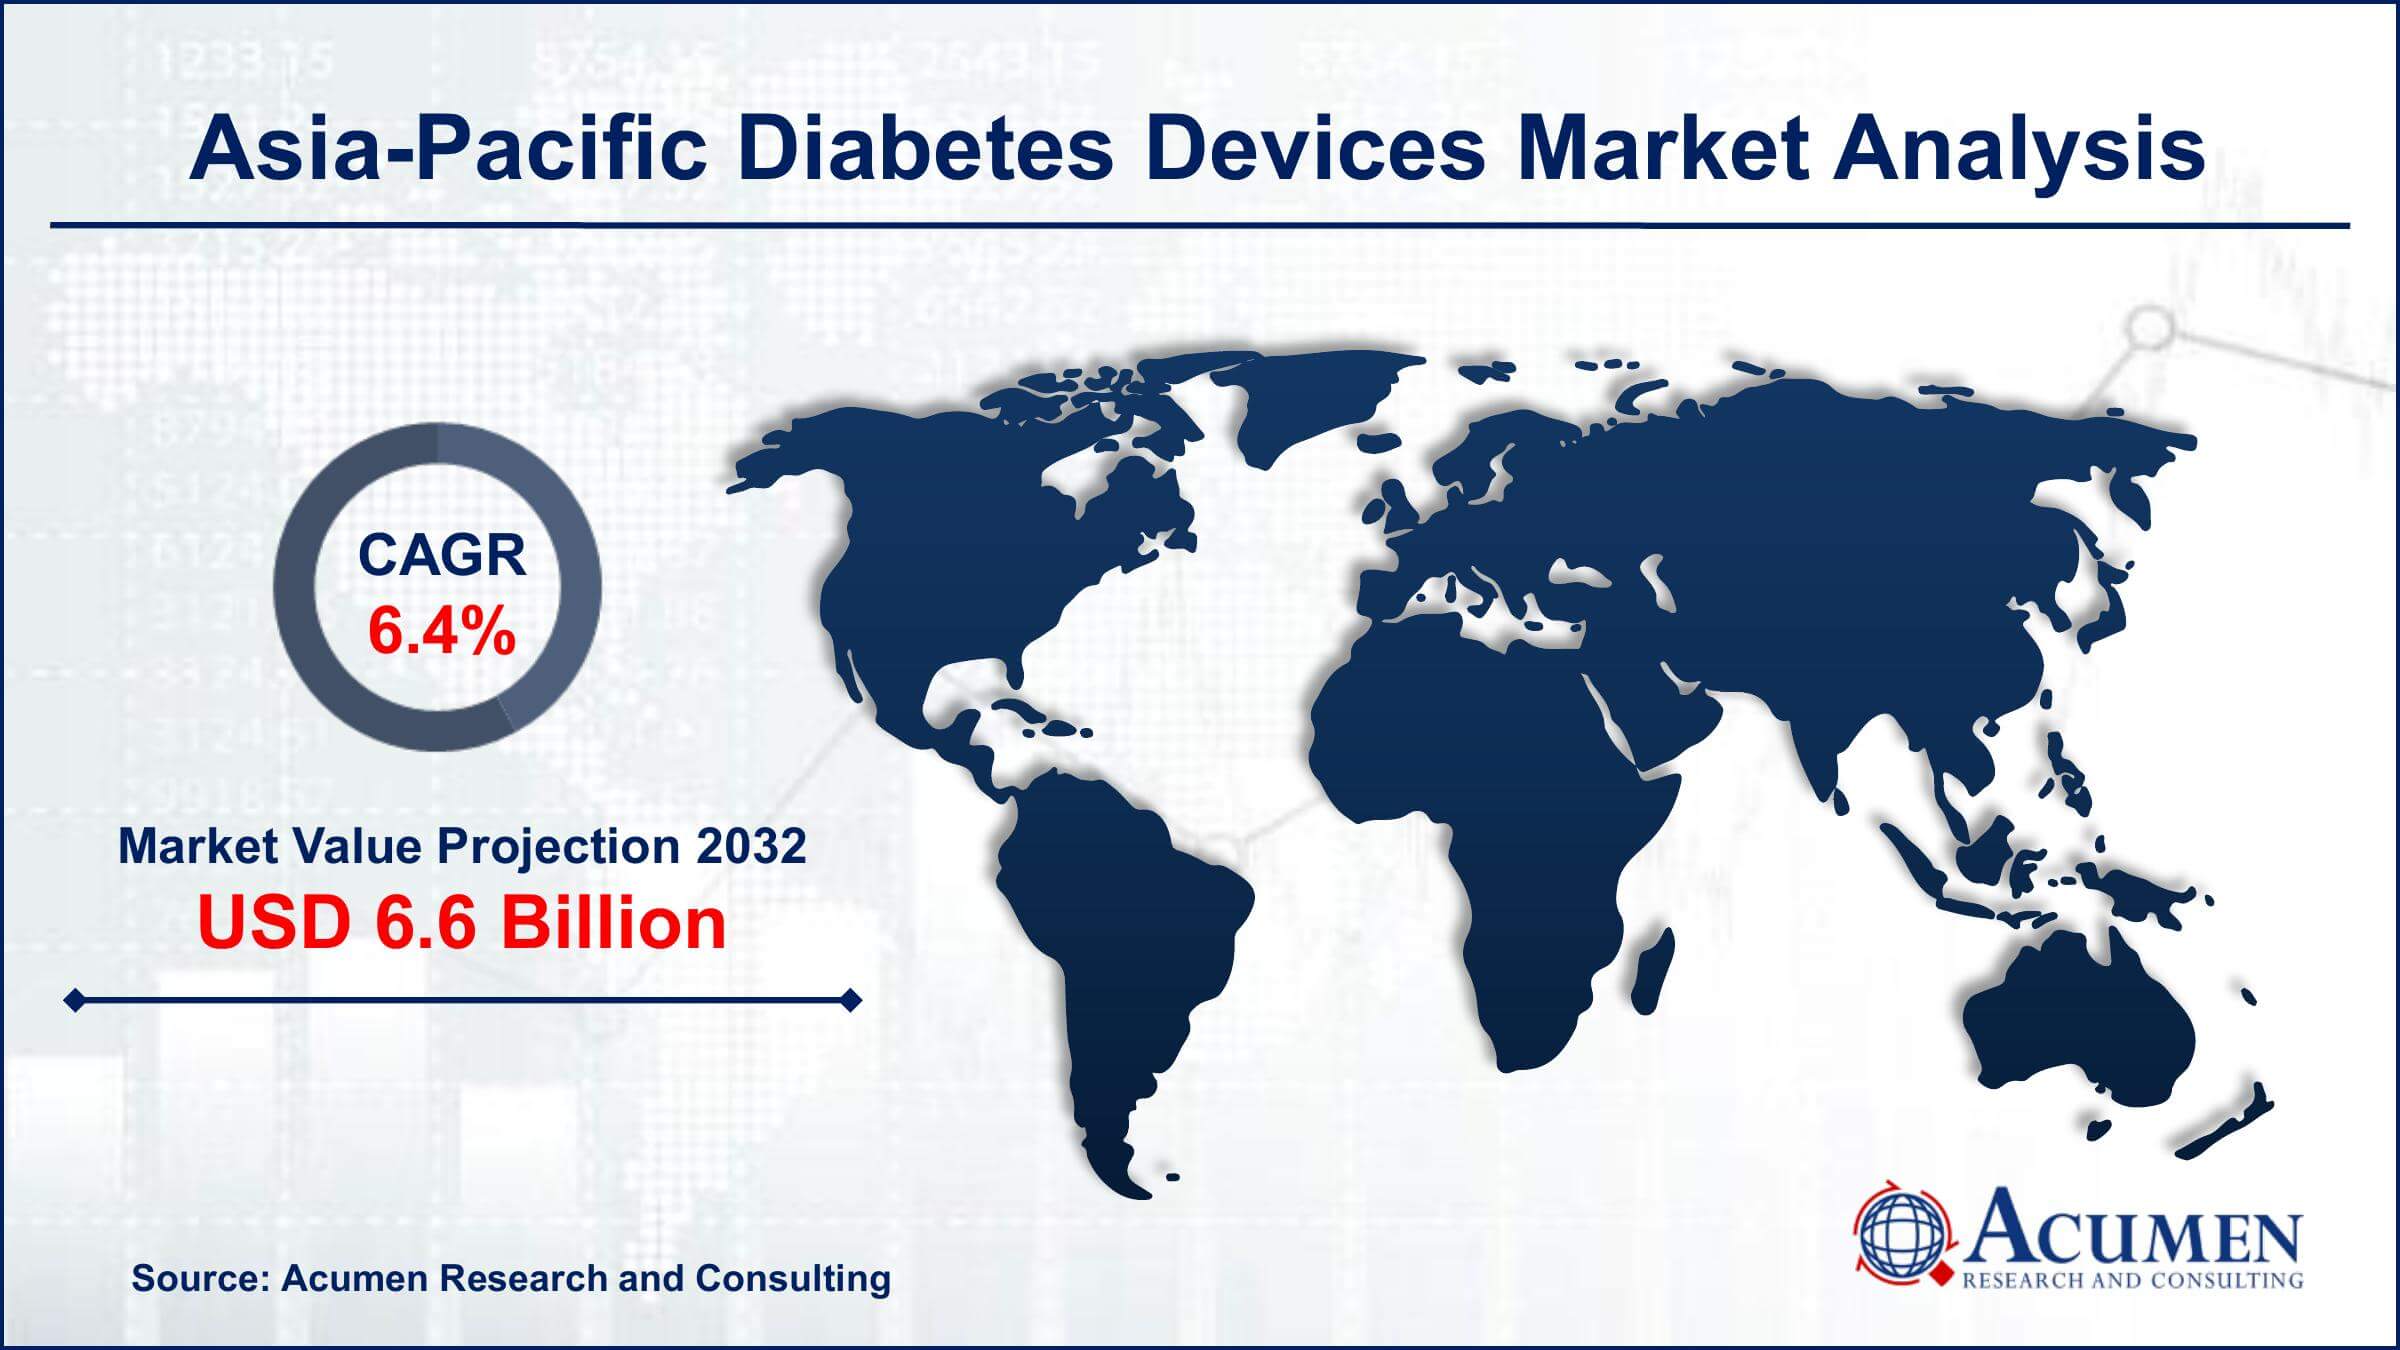 Asia-Pacific Diabetes Devices Market Trends